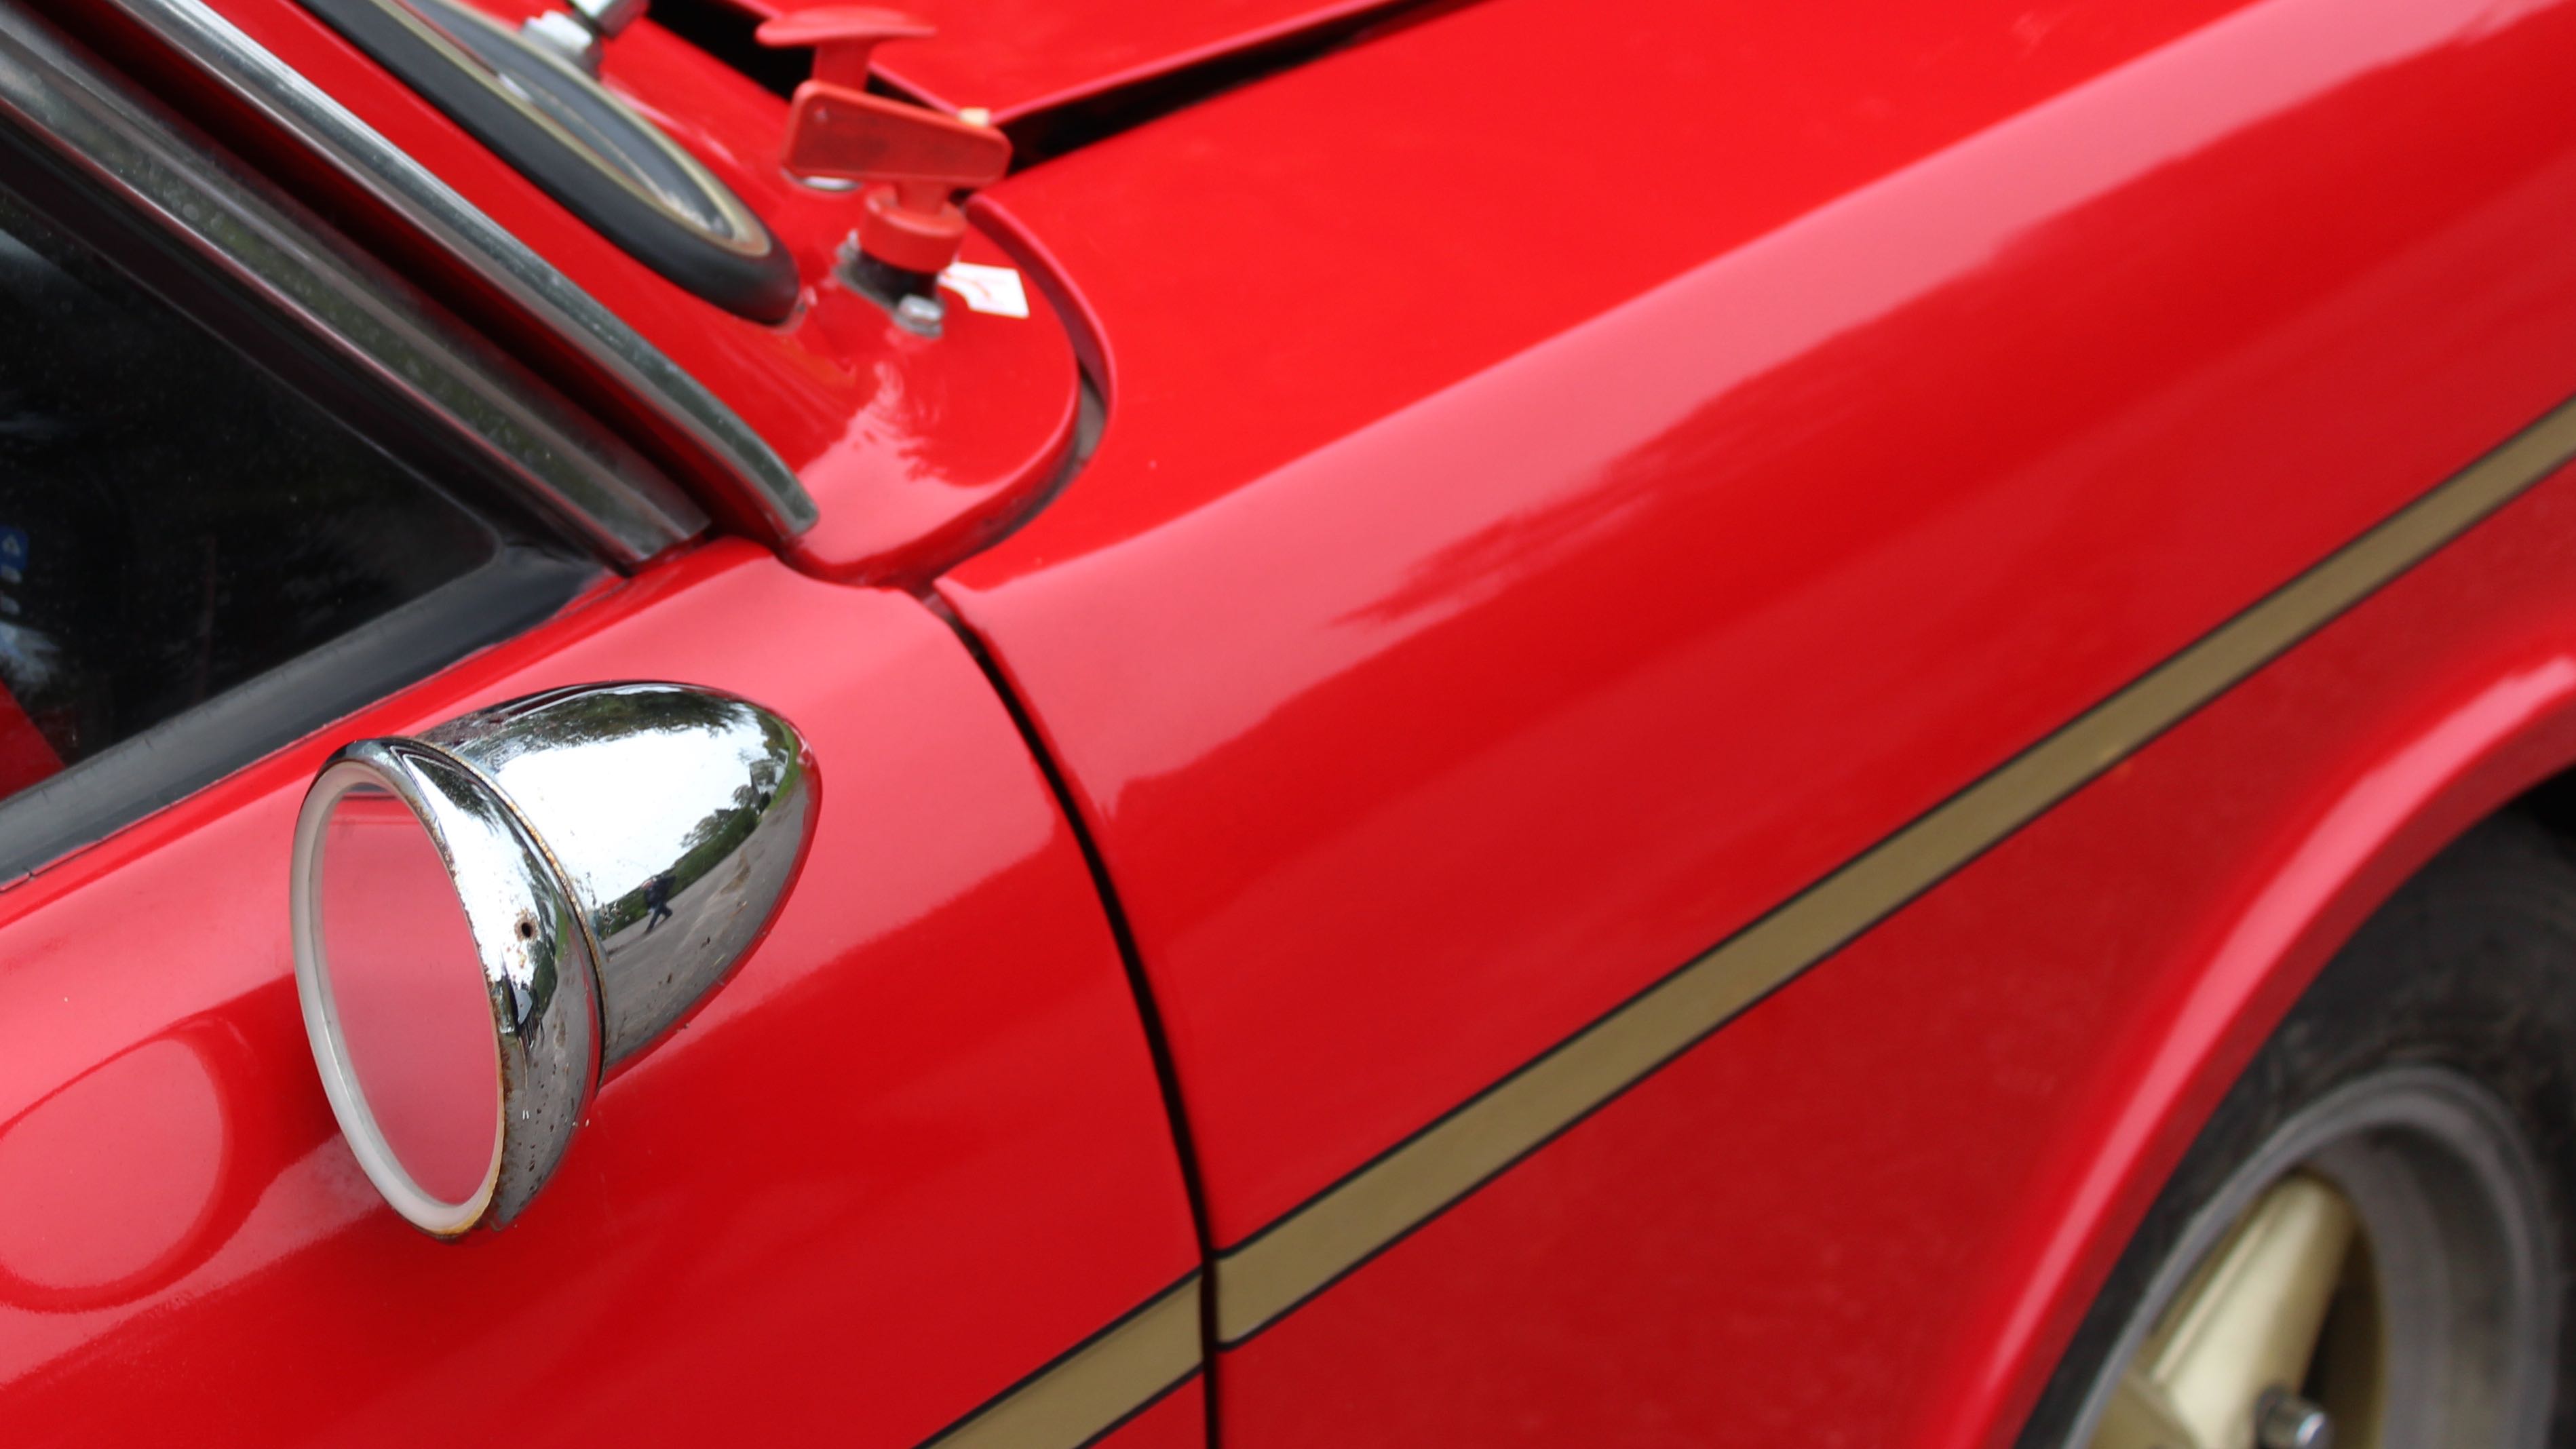 ford Lotus Cortina Mk2 detalj backspegel